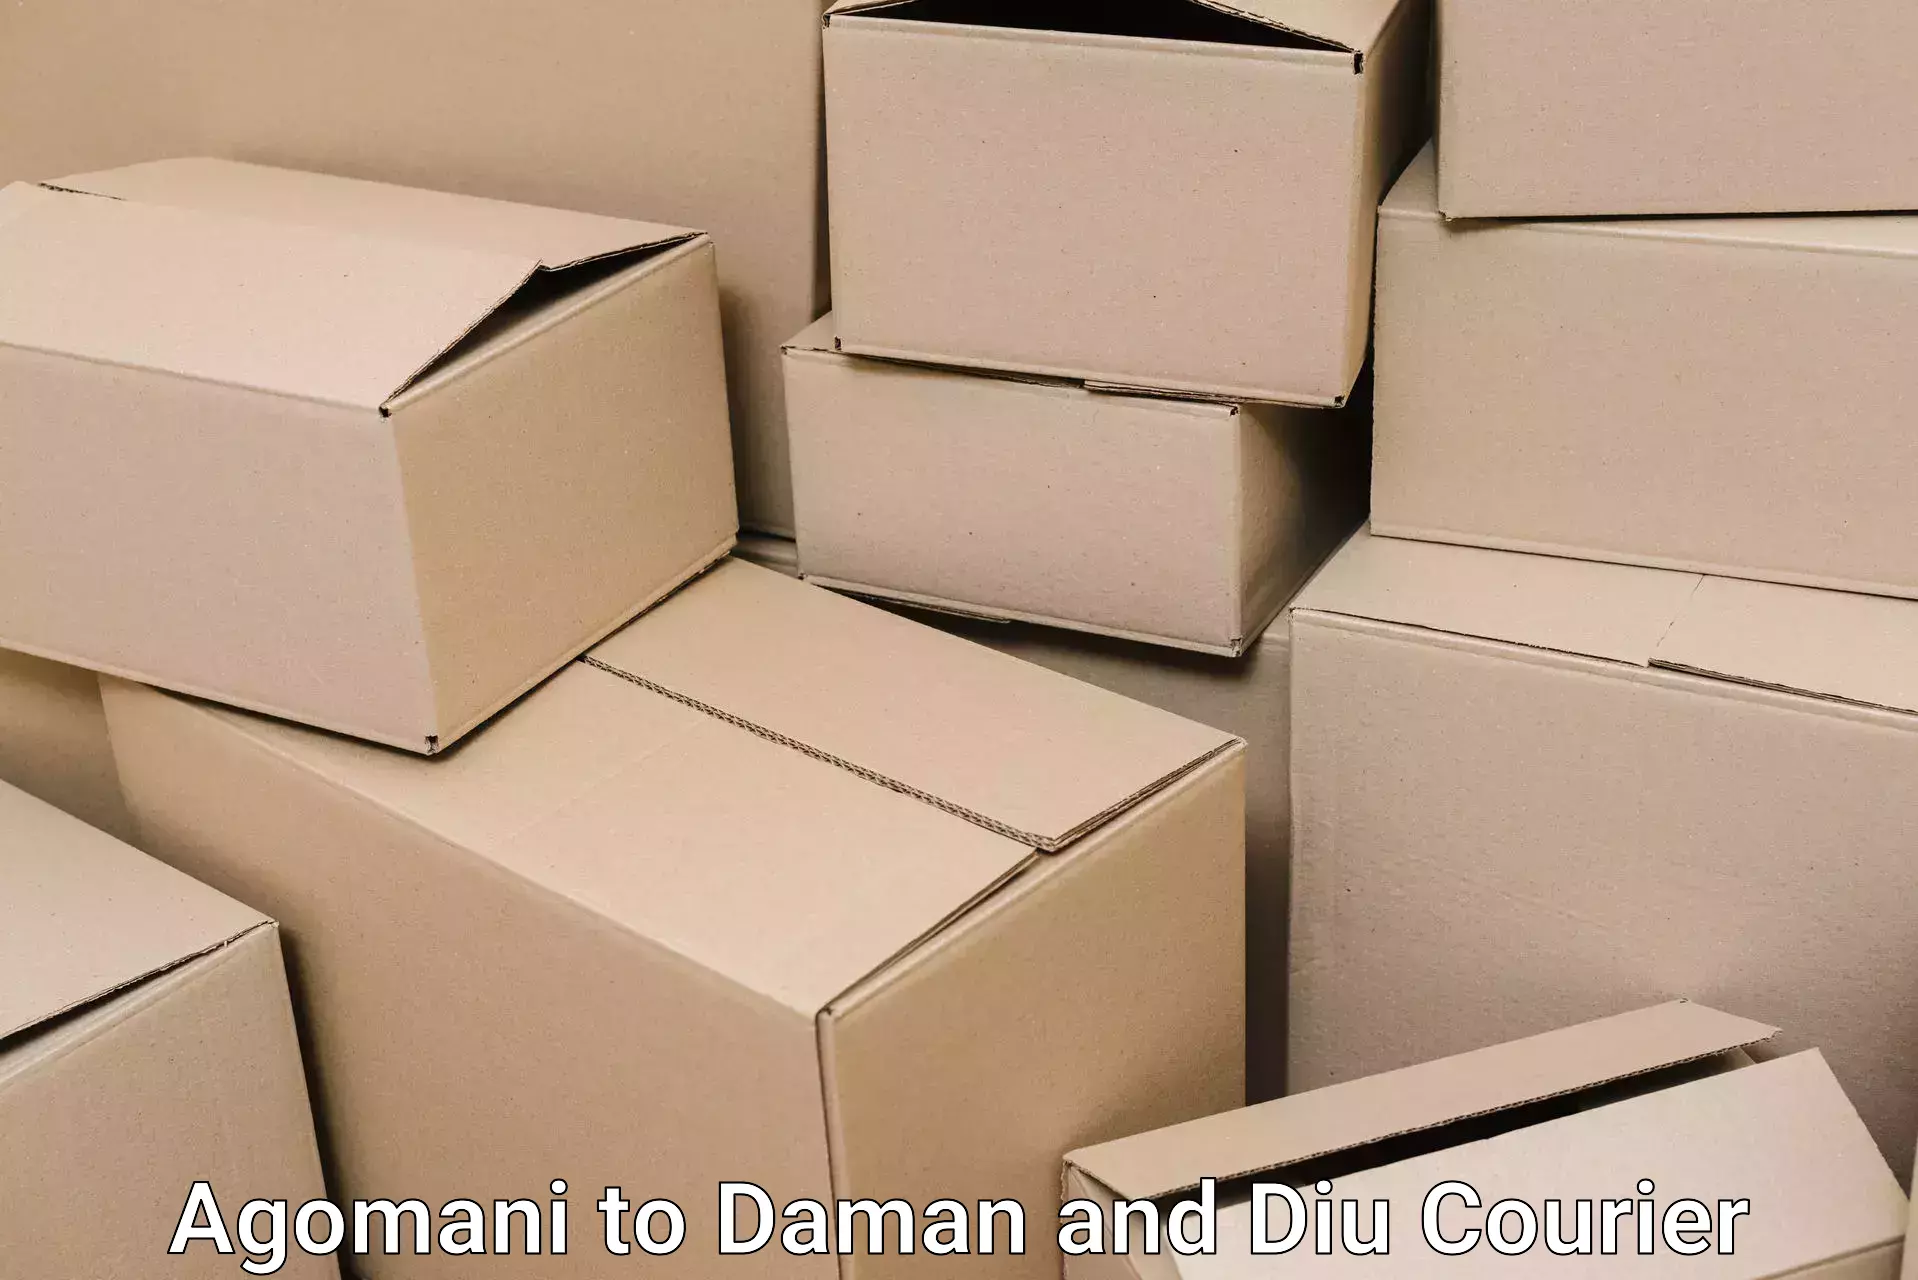 Furniture delivery service Agomani to Daman and Diu